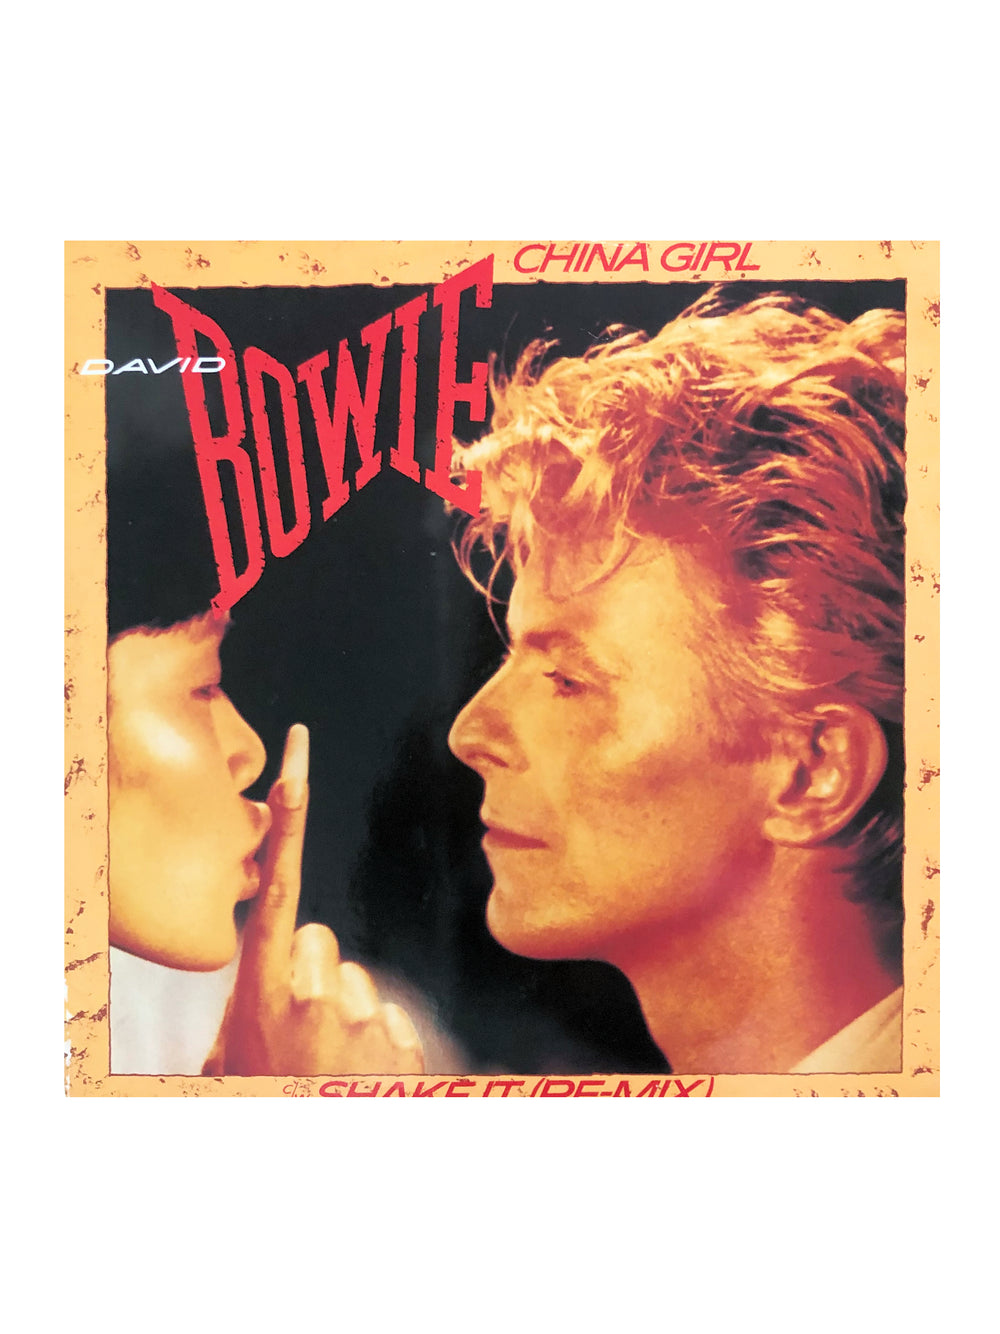 David Bowie – China Girl / Shake It (Re-Mix)Vinyl 12 Inch Preloved:1983